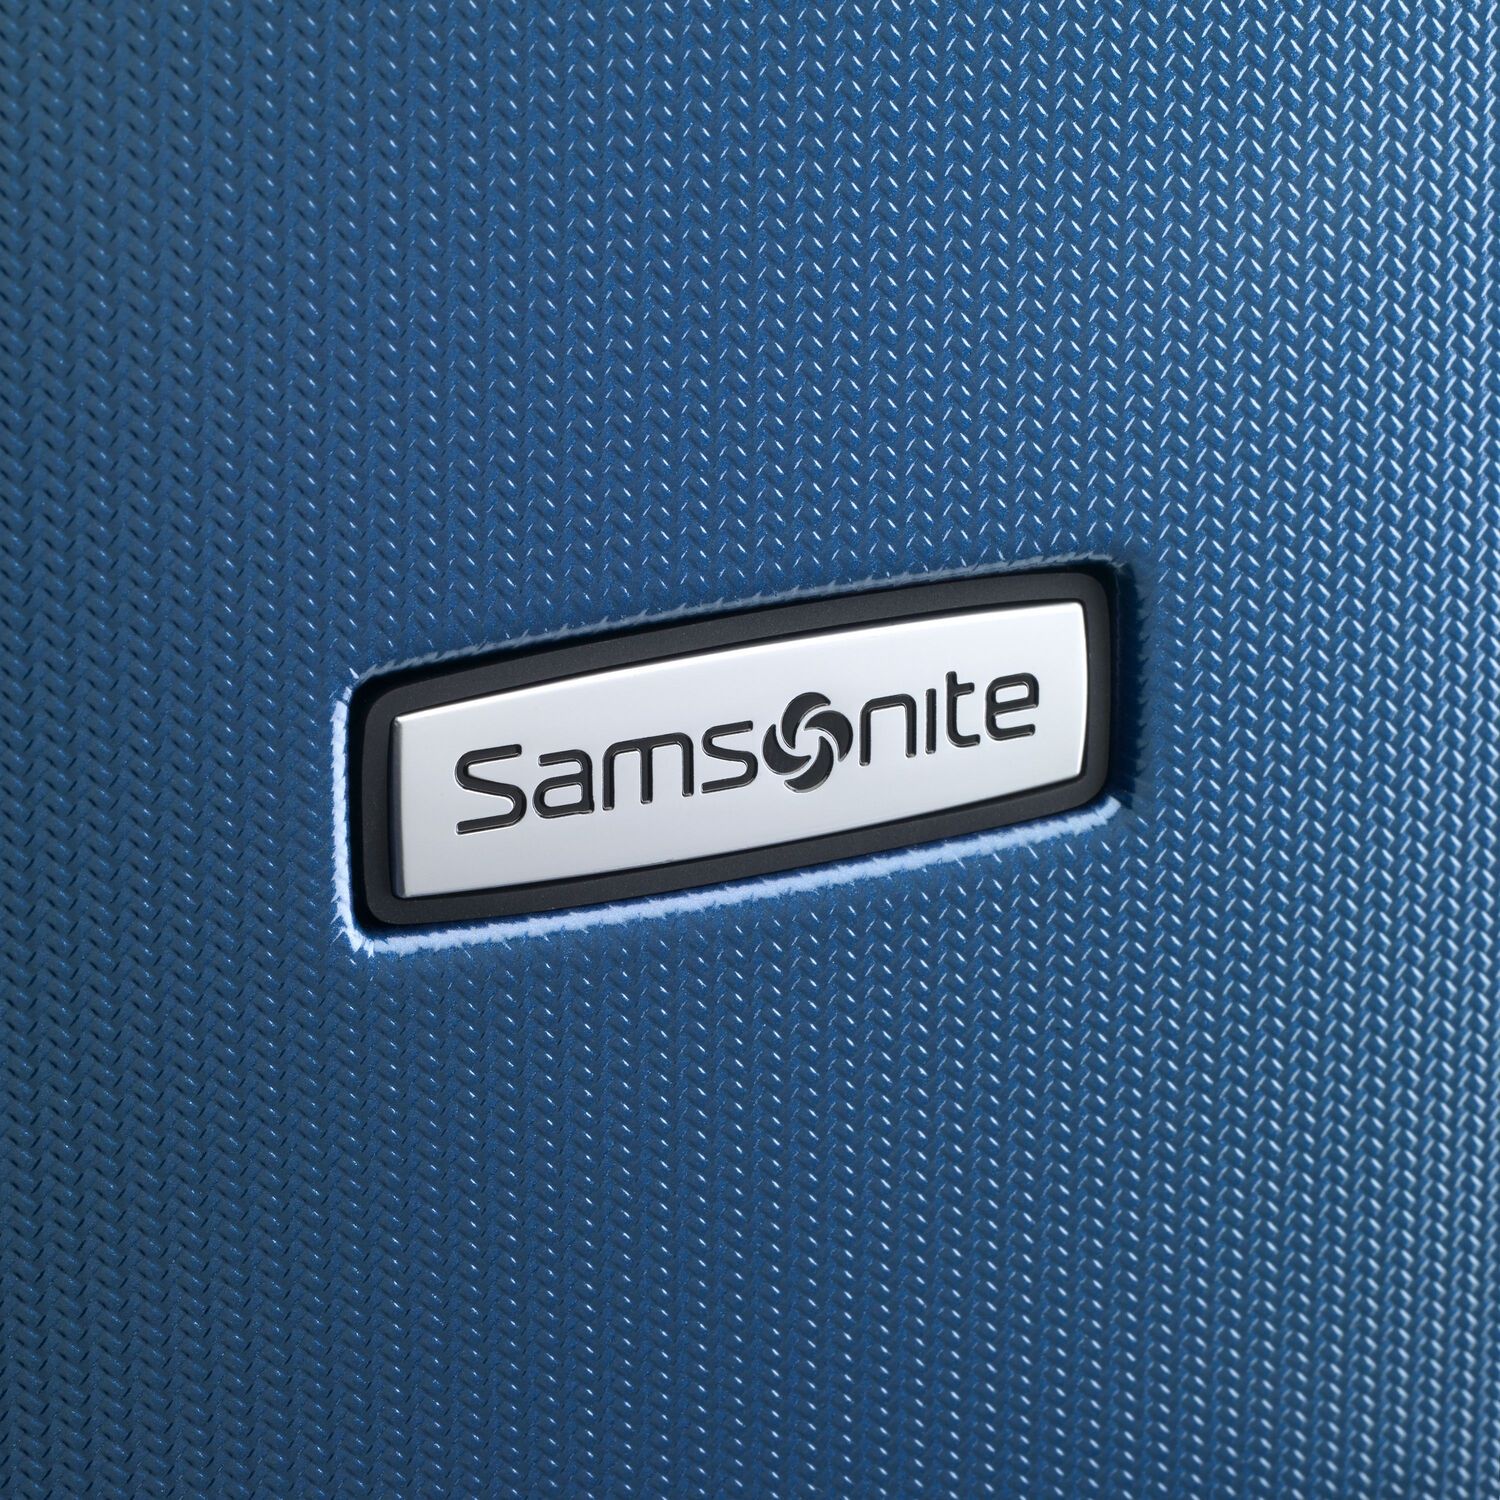 Samsonite Winfield NXT Spinner Underseater Luggage